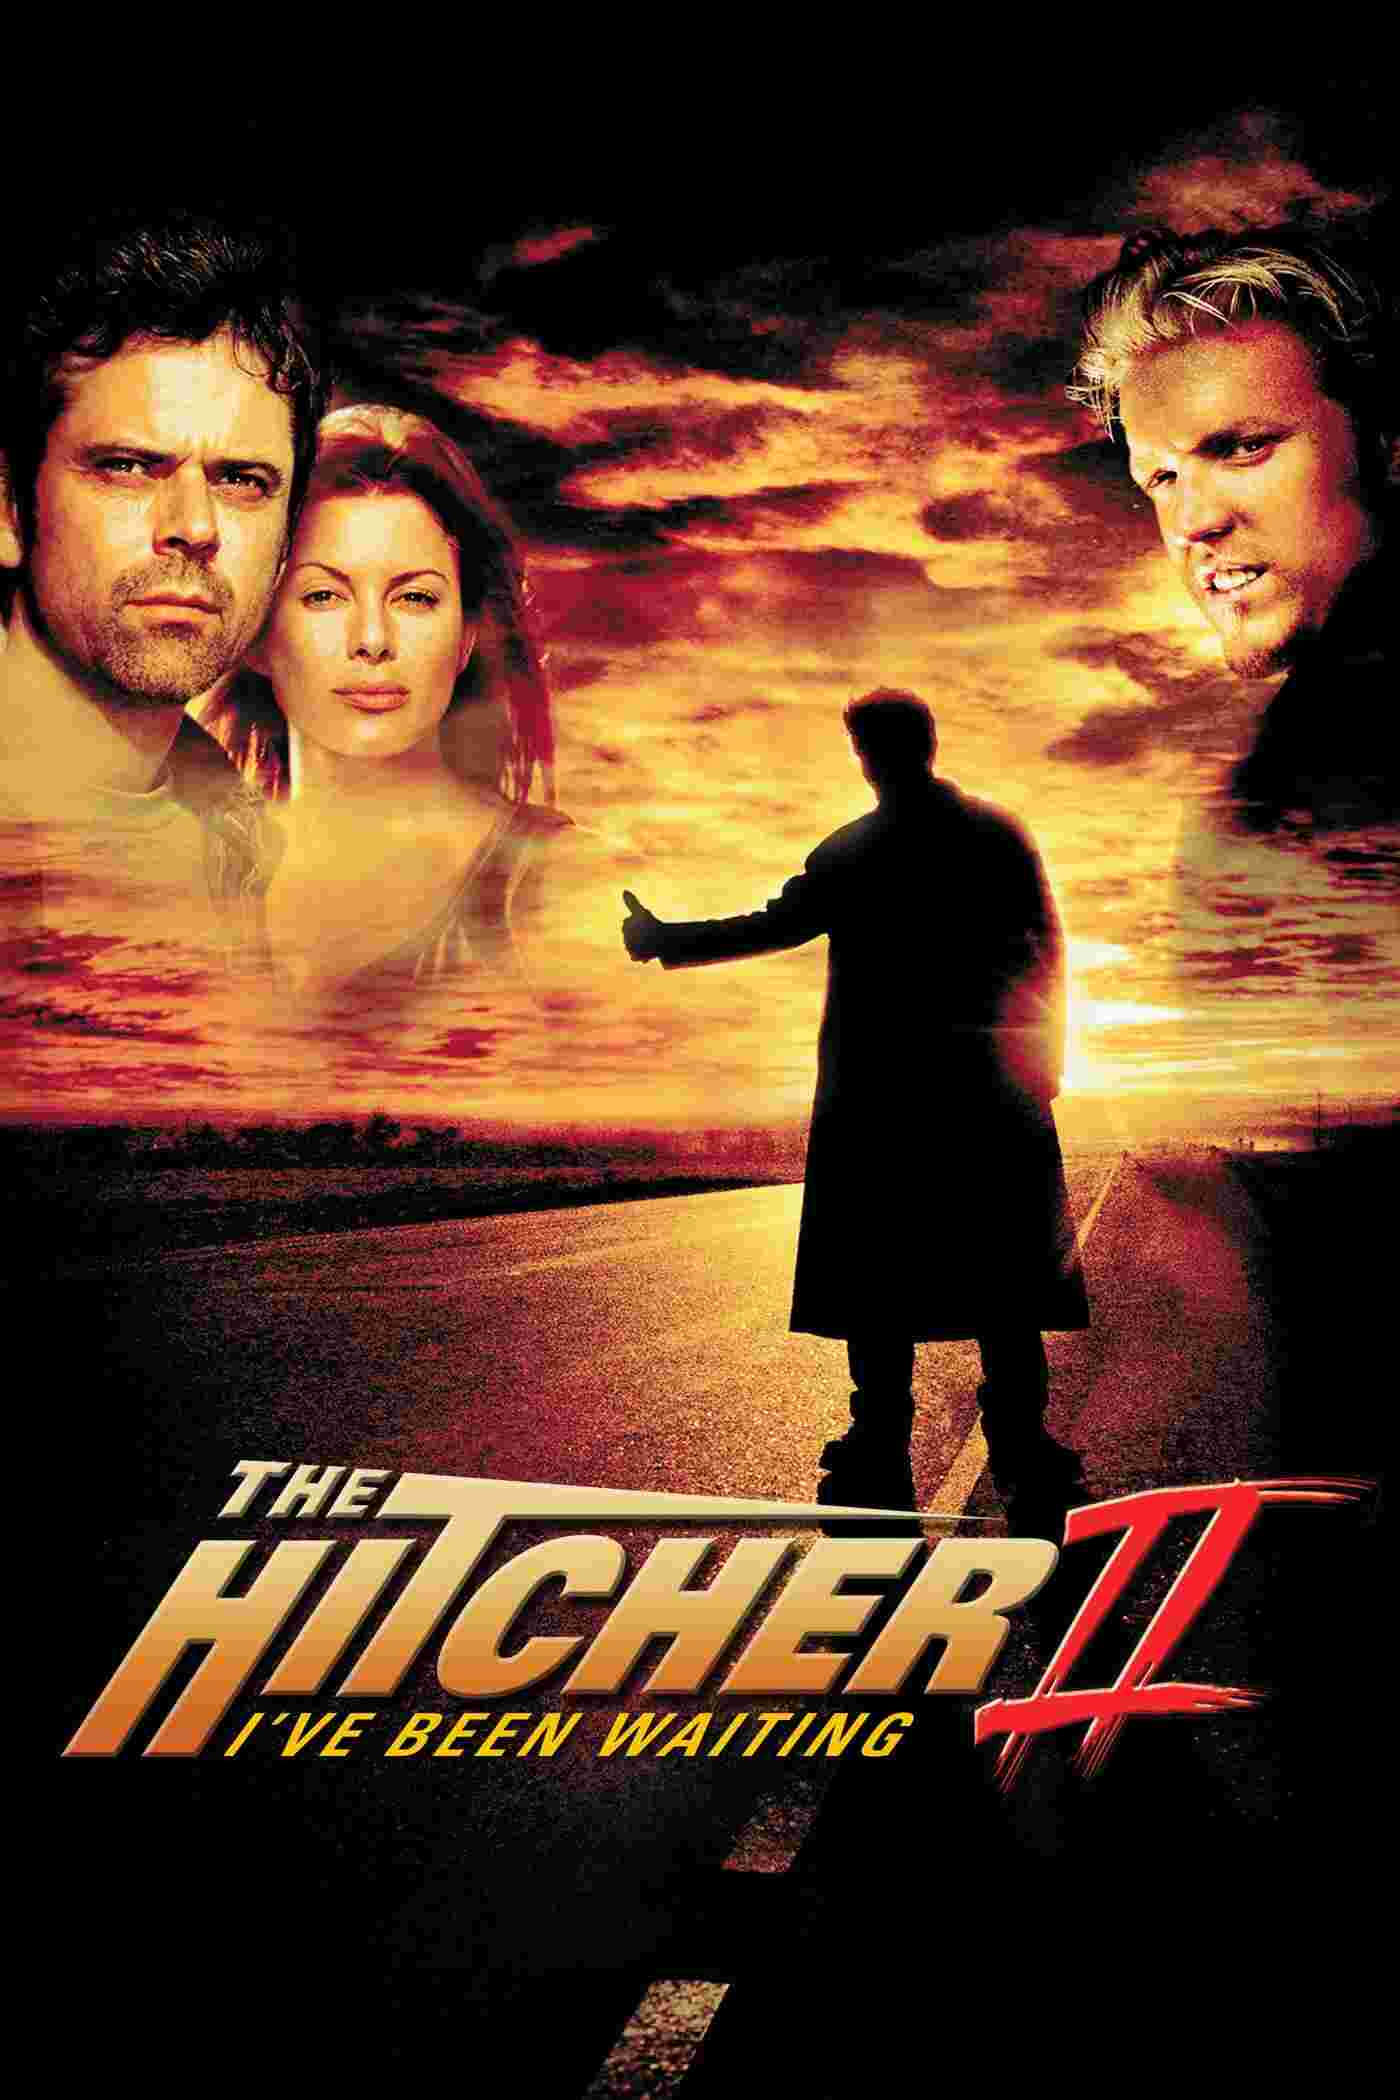 The Hitcher II: I've Been Waiting (2003) Jake Busey